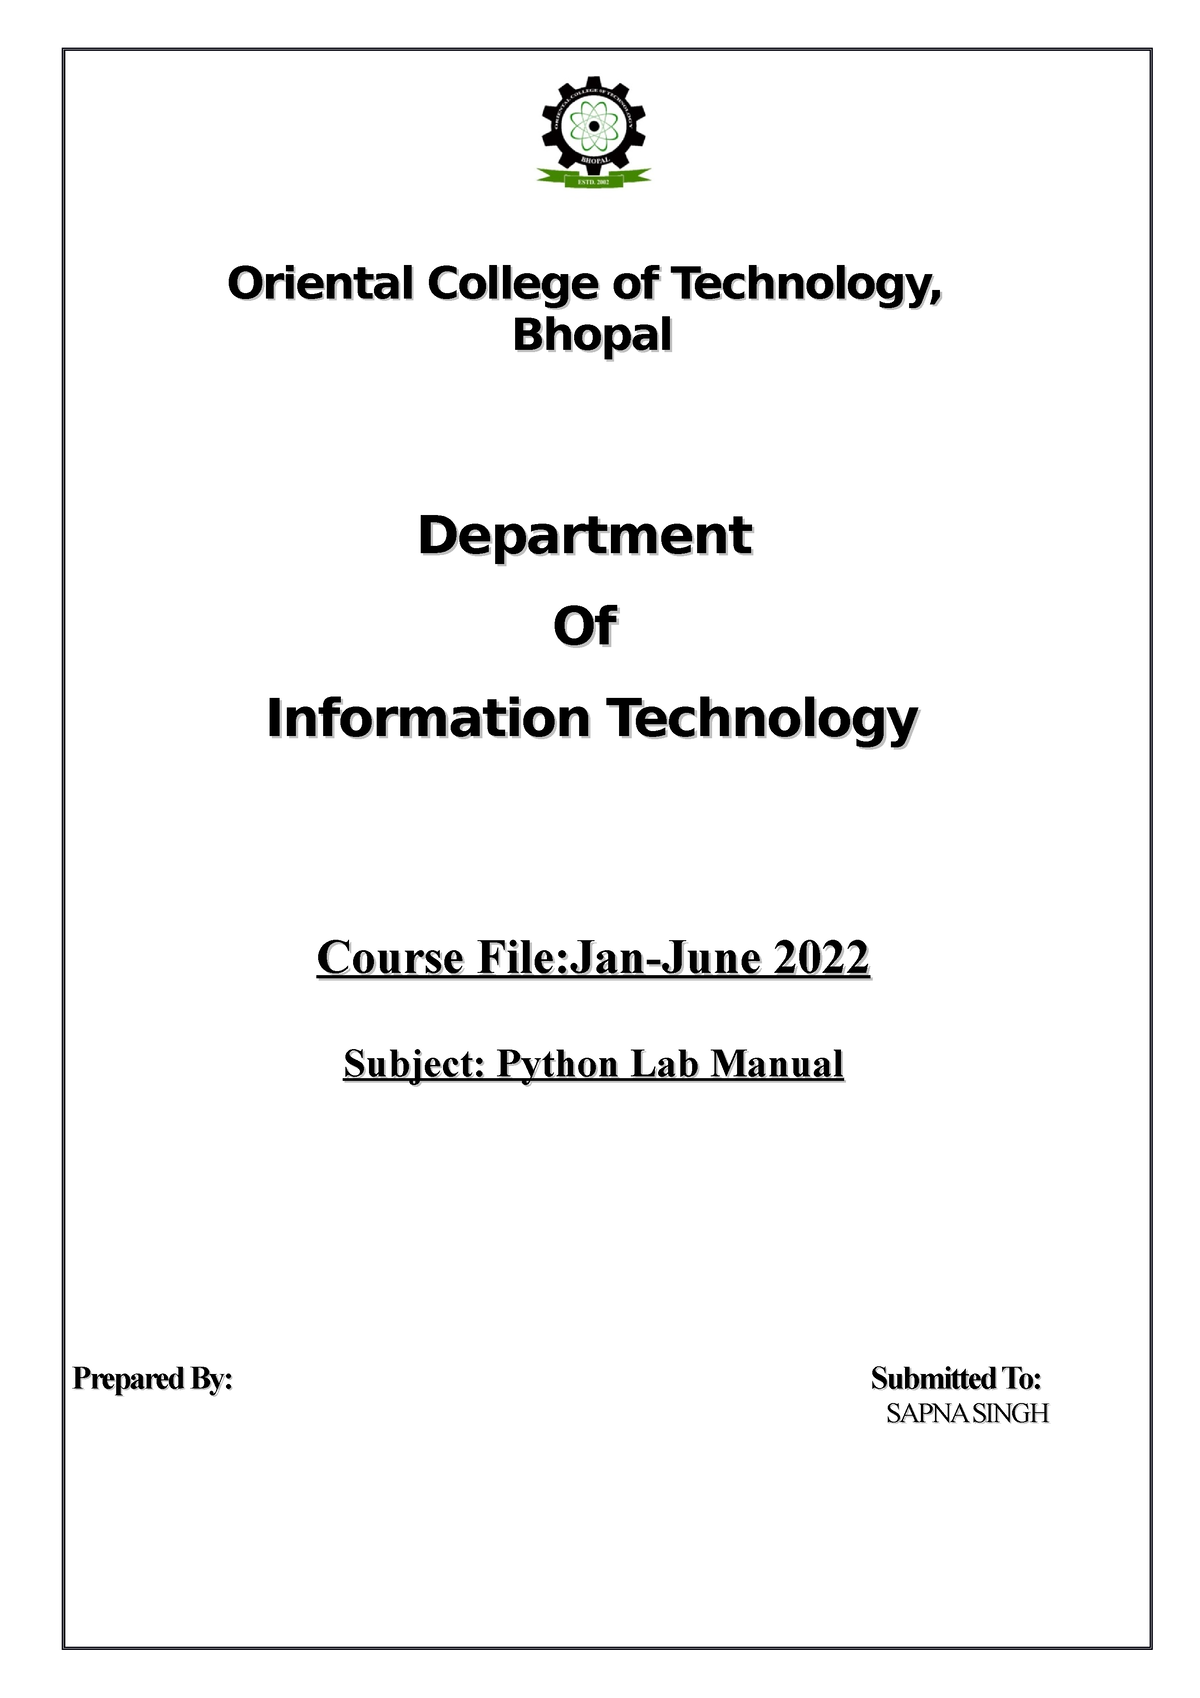 Python Lab Manual (1) - Xndndj - Oriental College of Technology ...